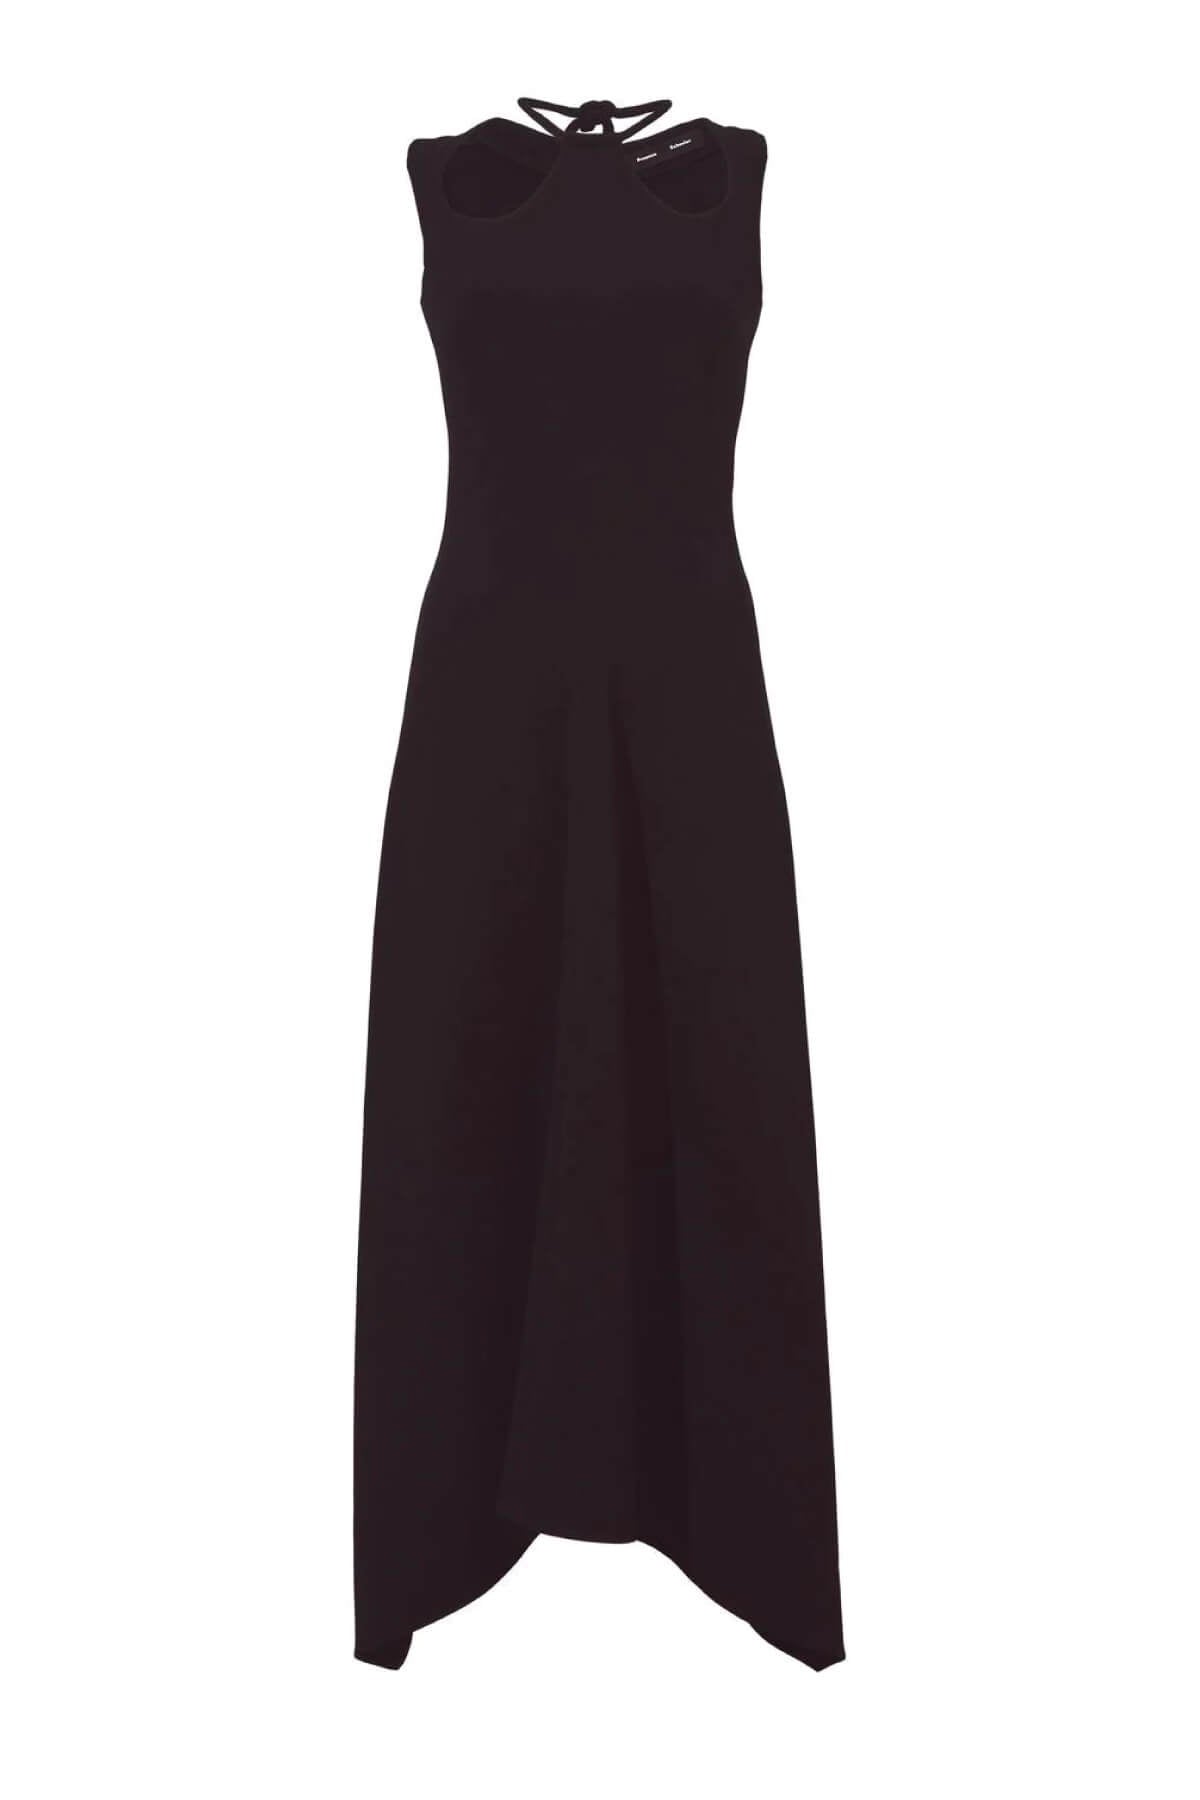 Proenza Schouler Matte Viscose Crepe A-Line Dress - Black